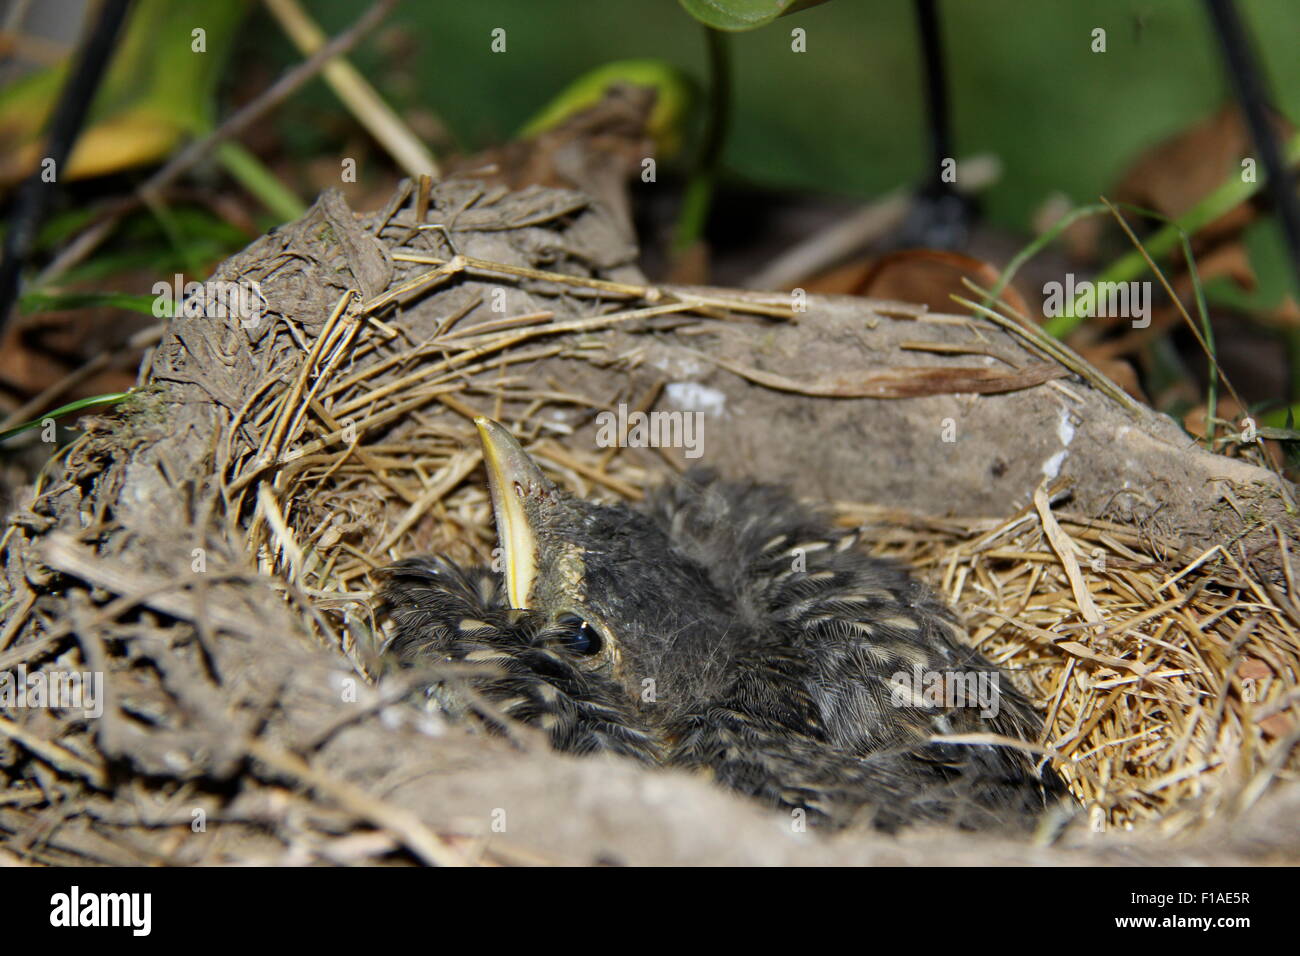 Baby birds in nest. Stock Photo